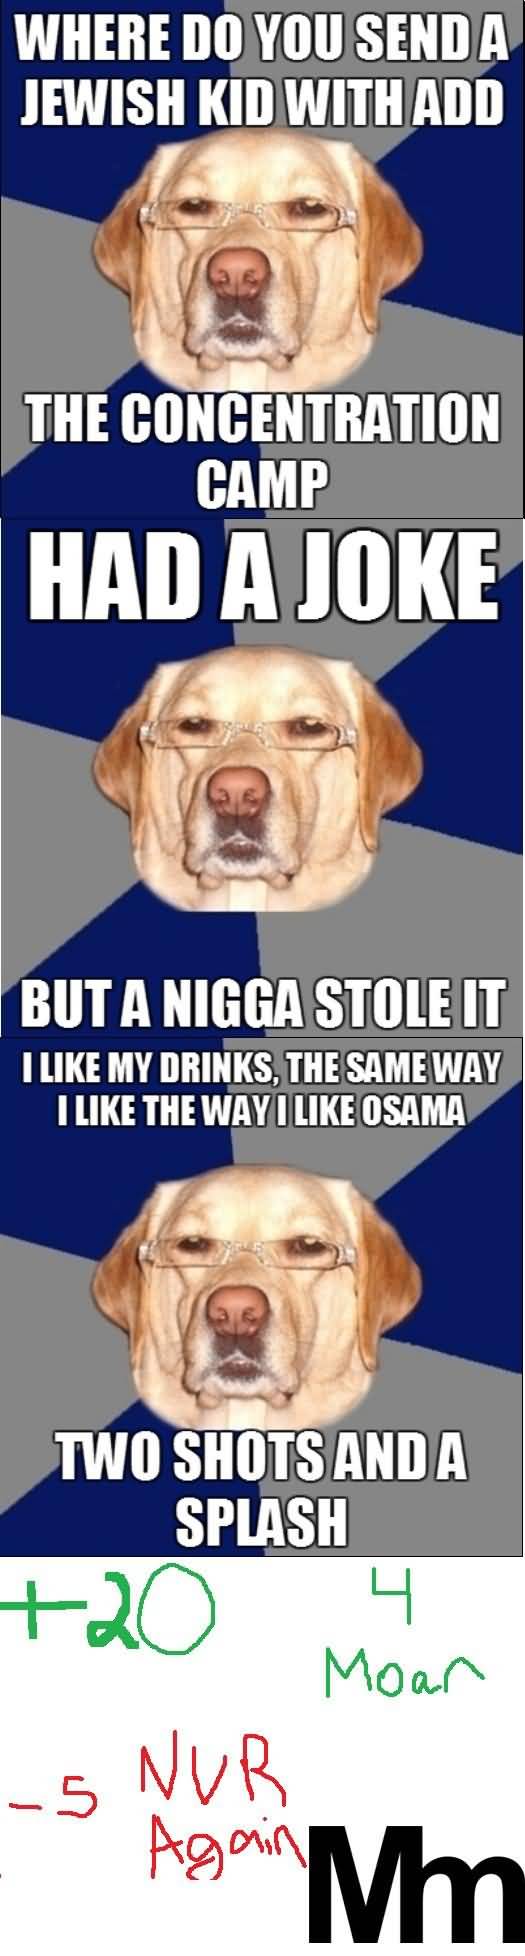 Racist Dog Meme Funny Image Photo Joke 14